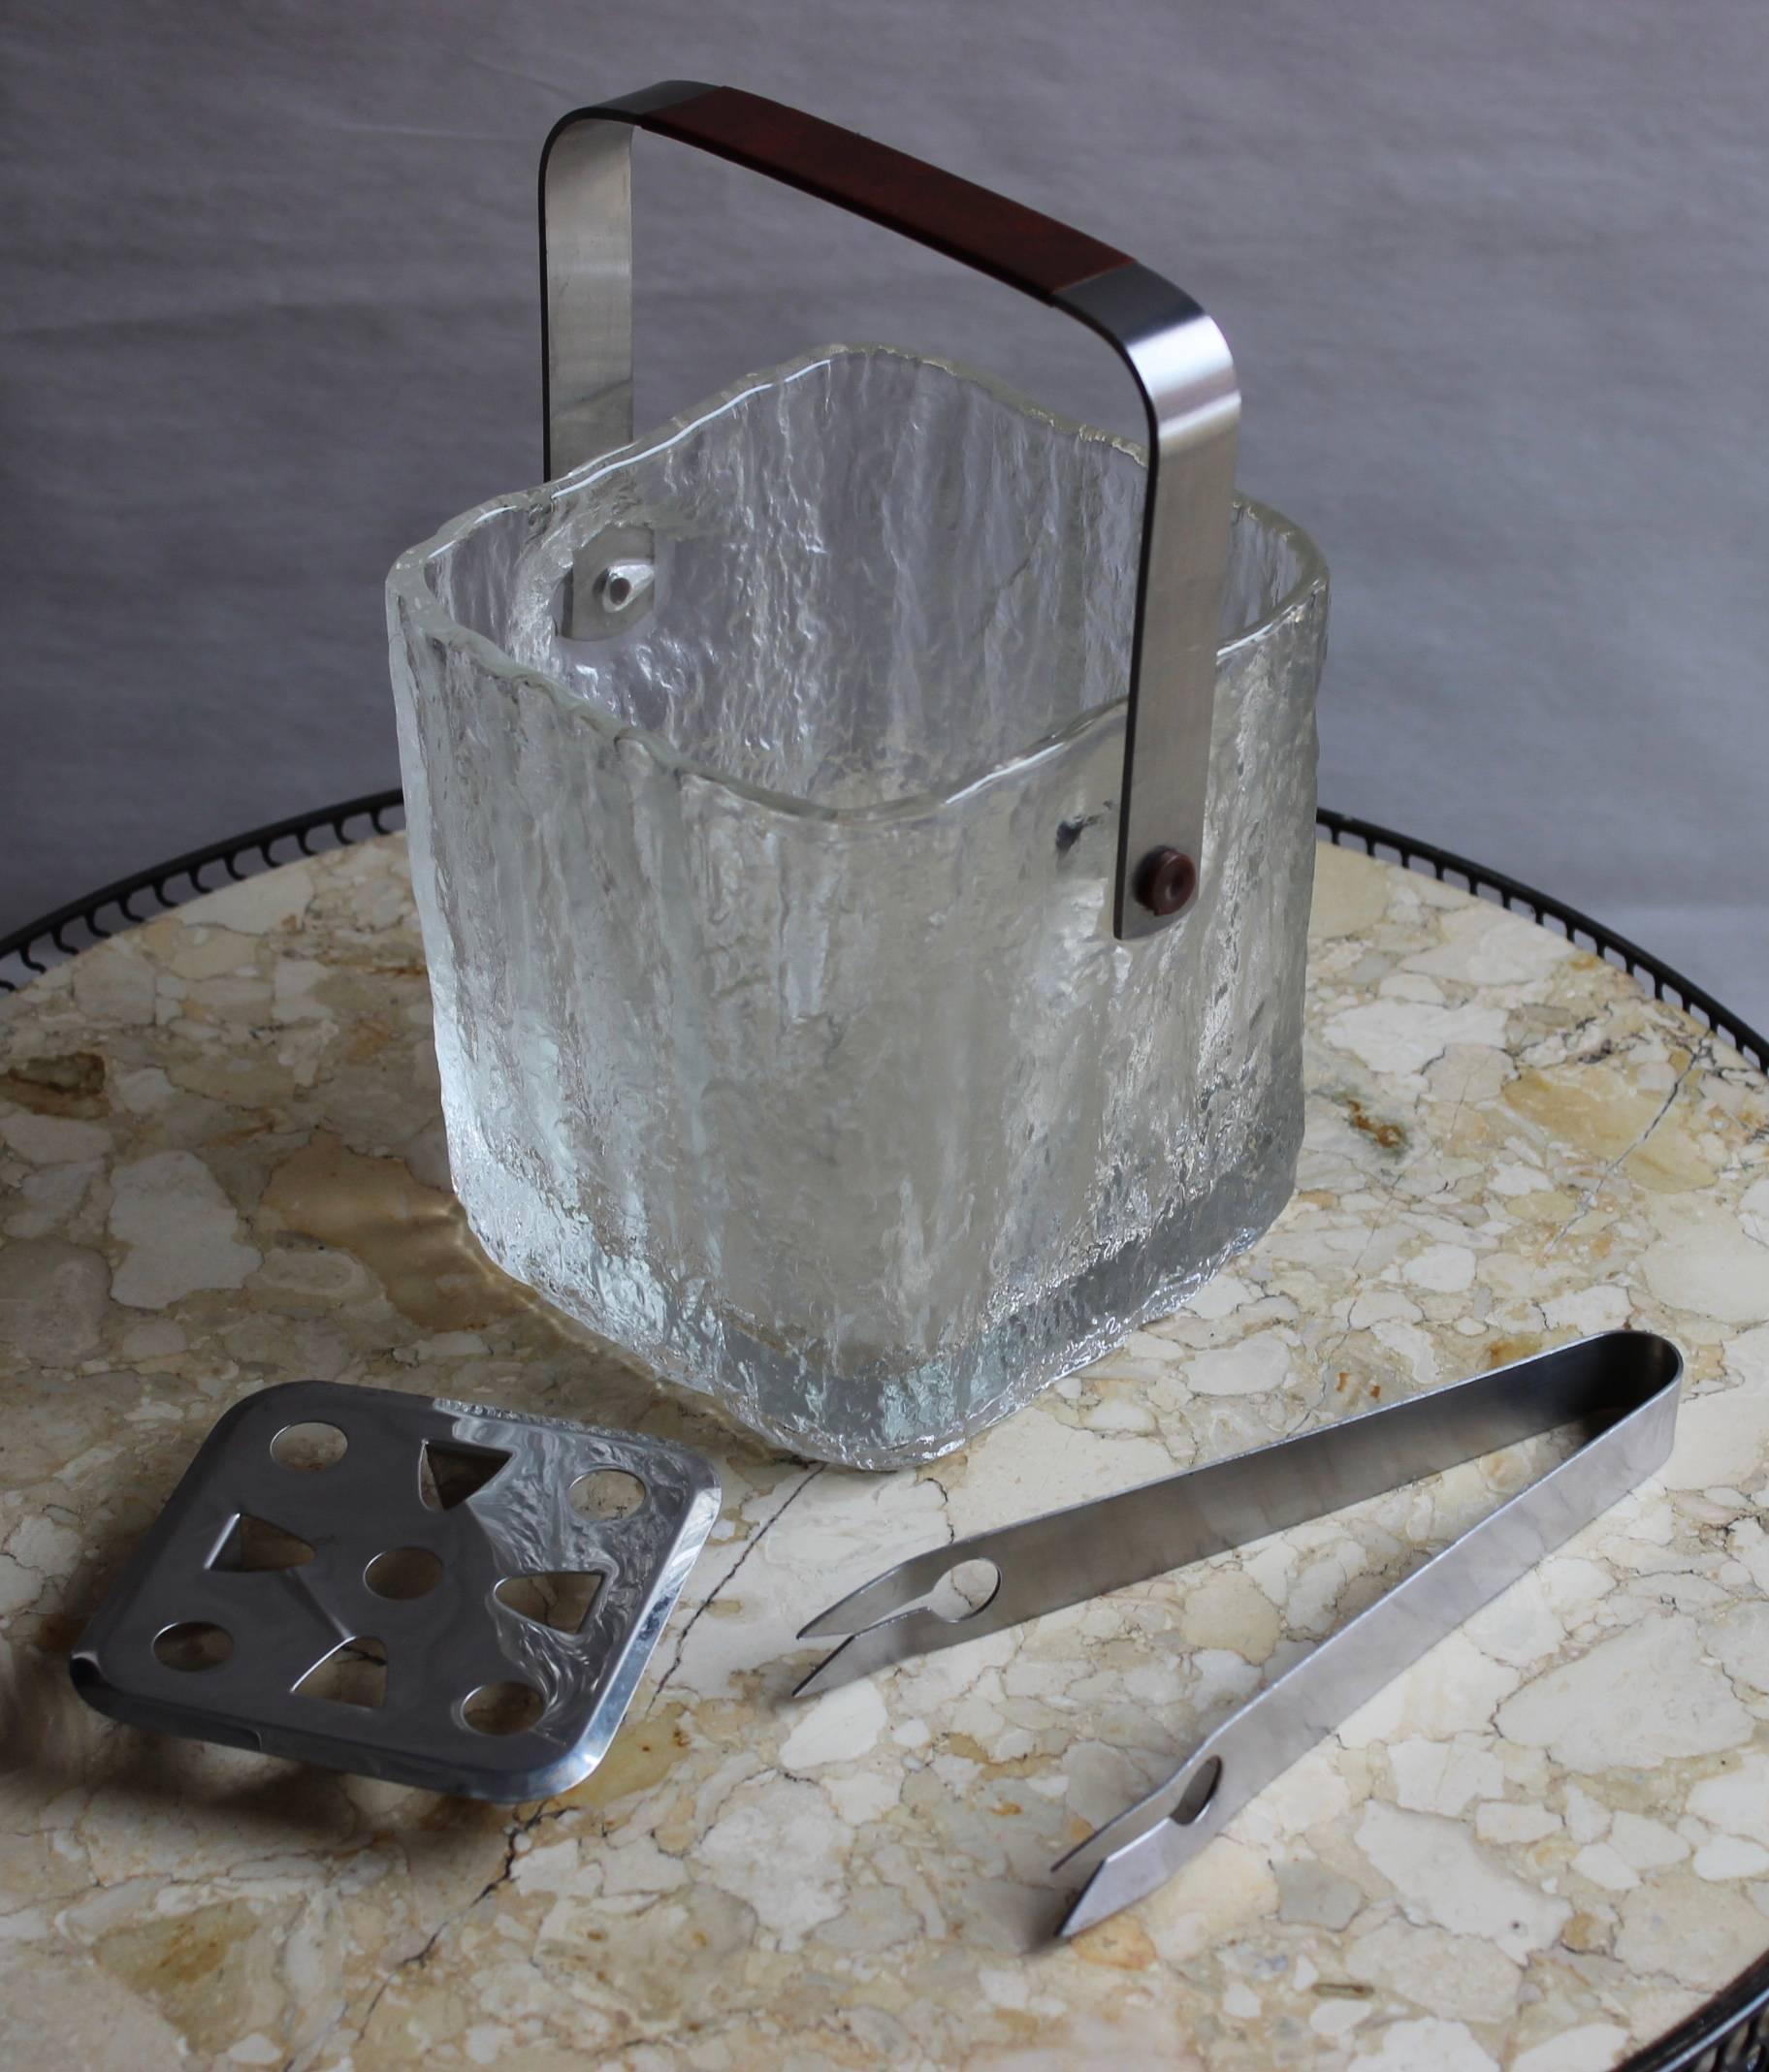 1960s modern glass ice bucket by Hoya Japan.